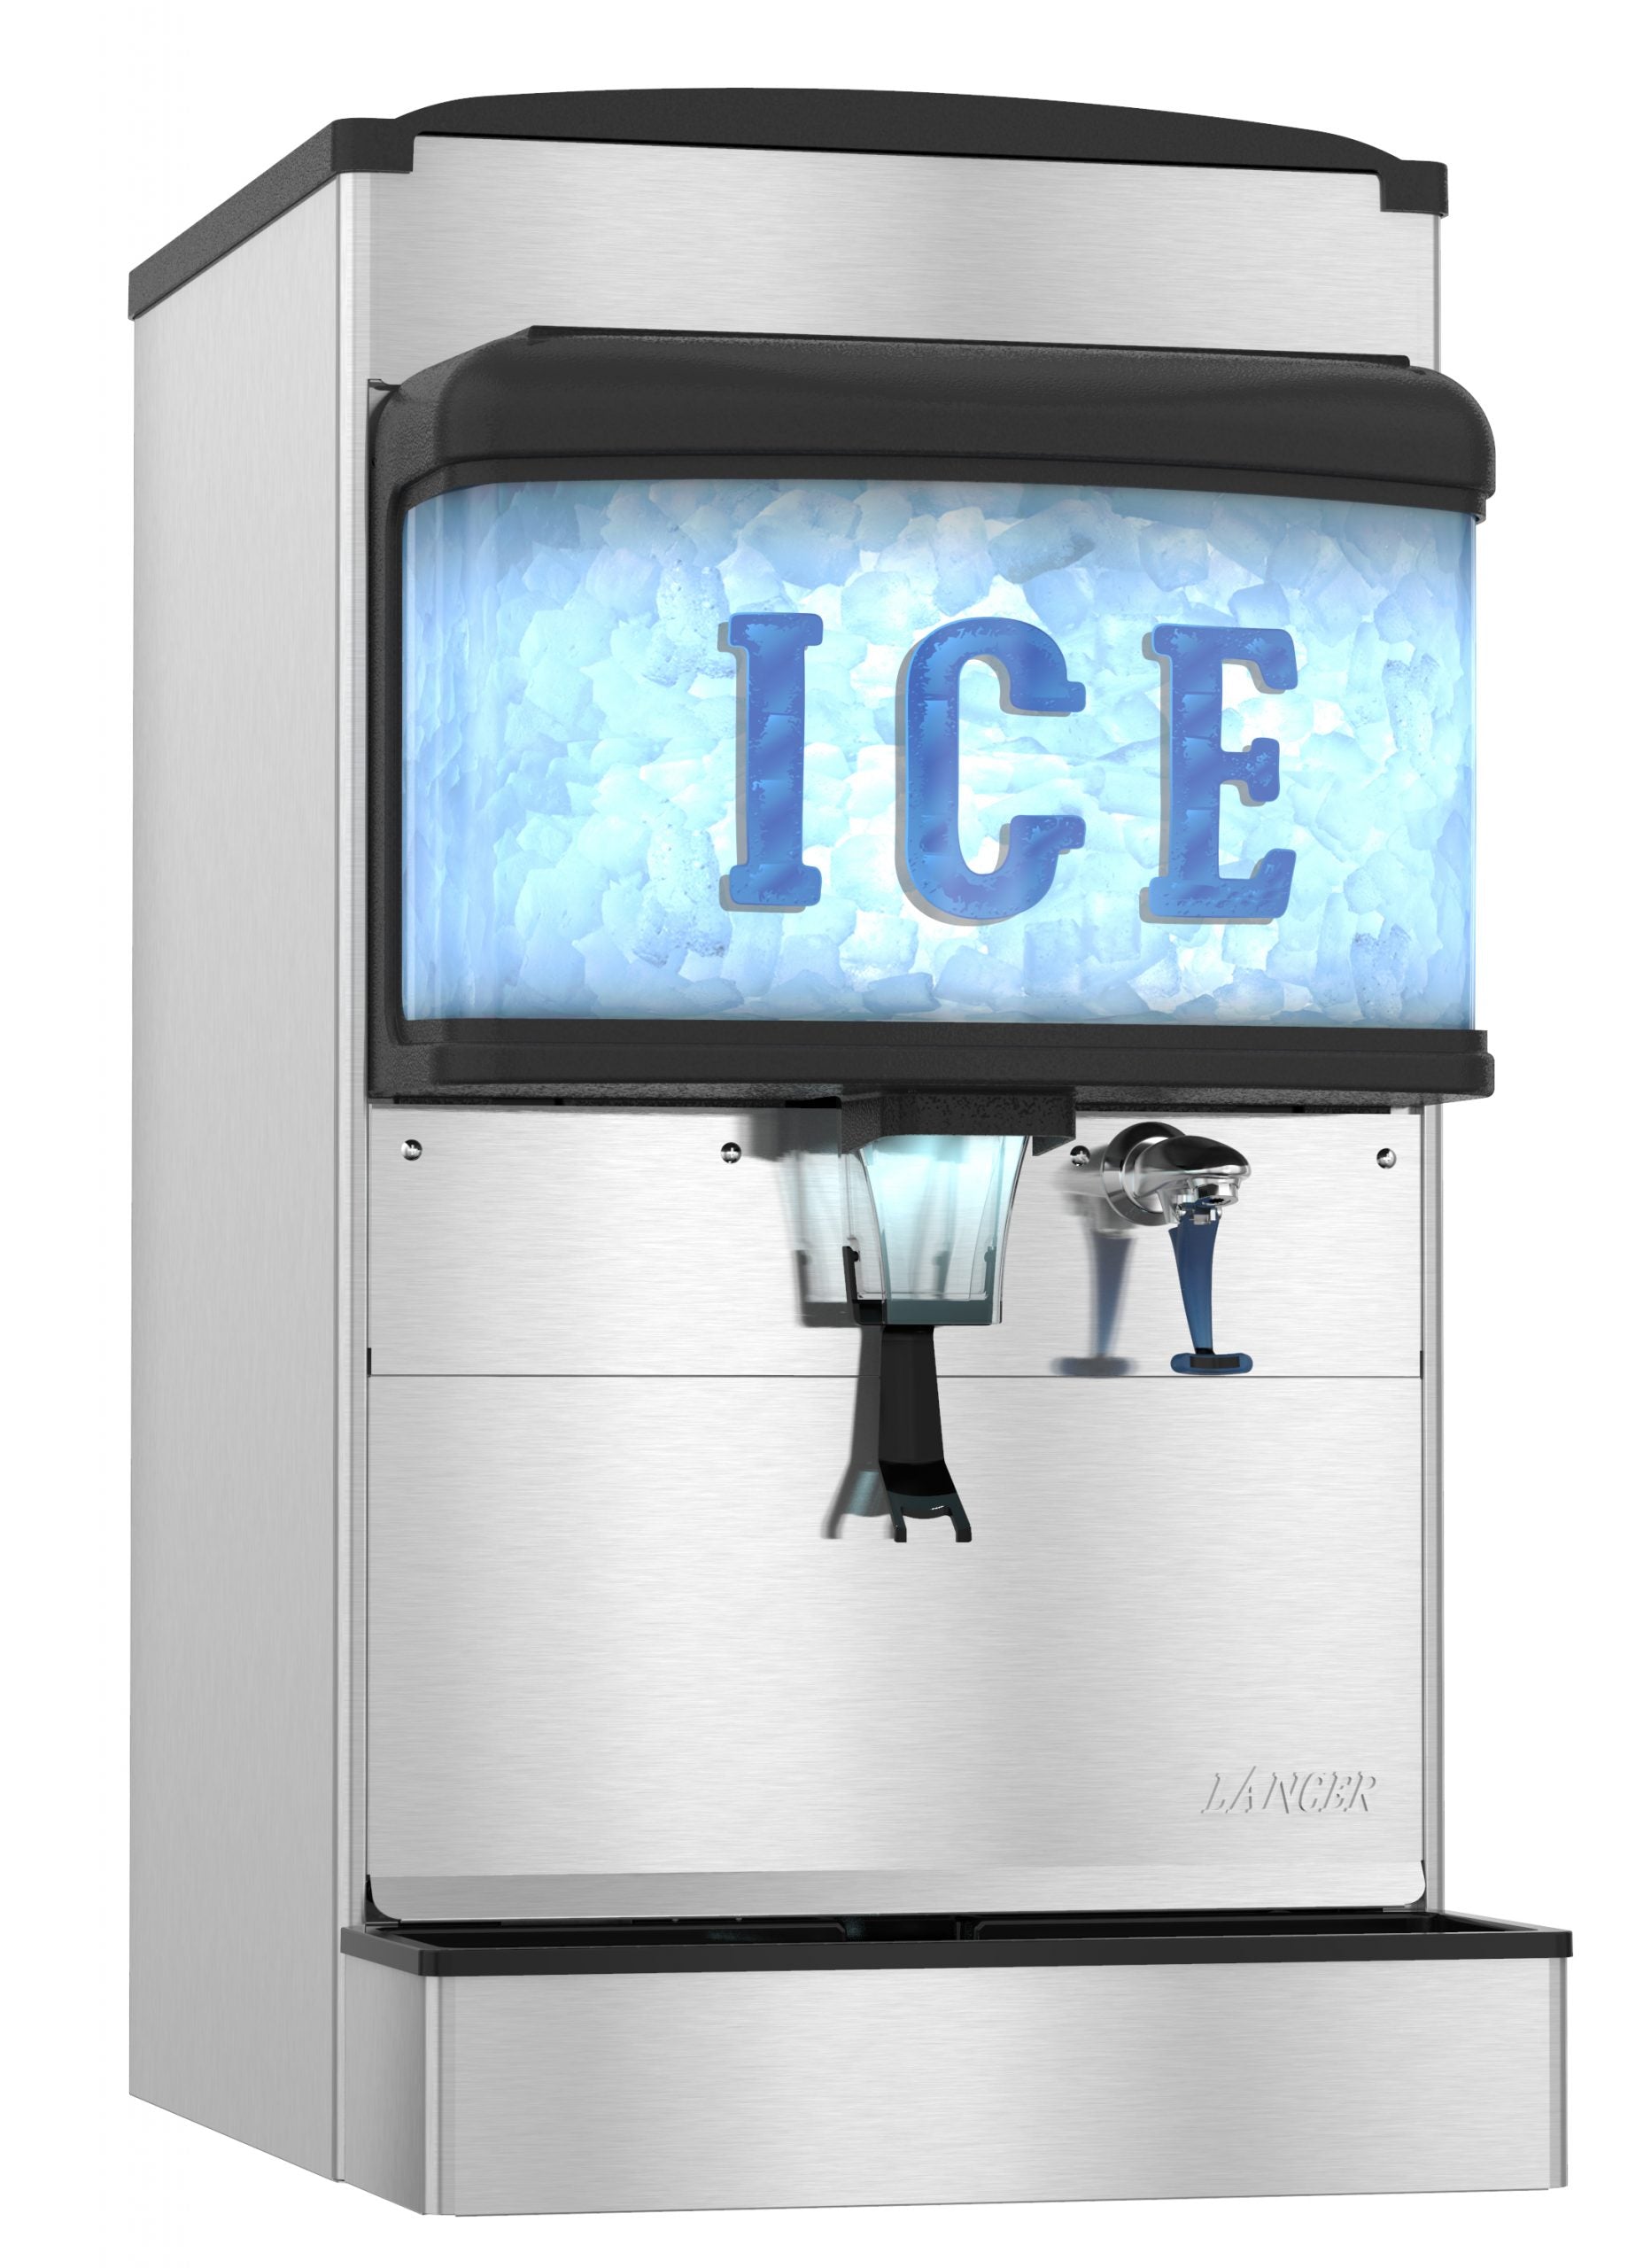 Hoshizaki DM-4420N | 22" Wide Countertop Cubelet Ice & Water Dispenser